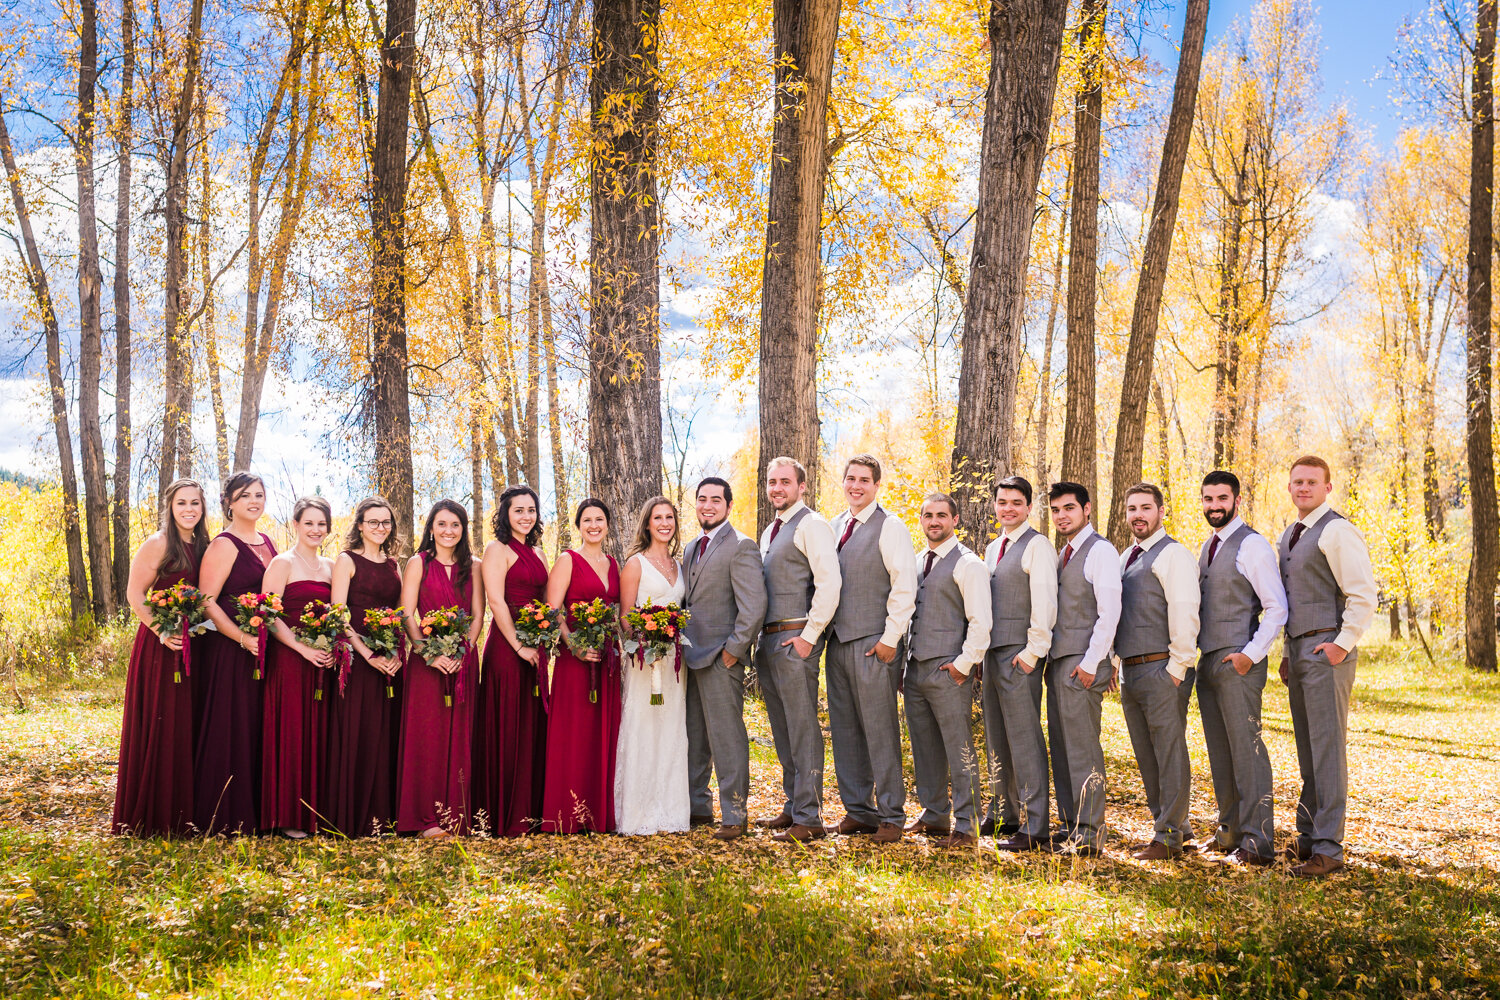  Fall wedding by JMGant Photography. 